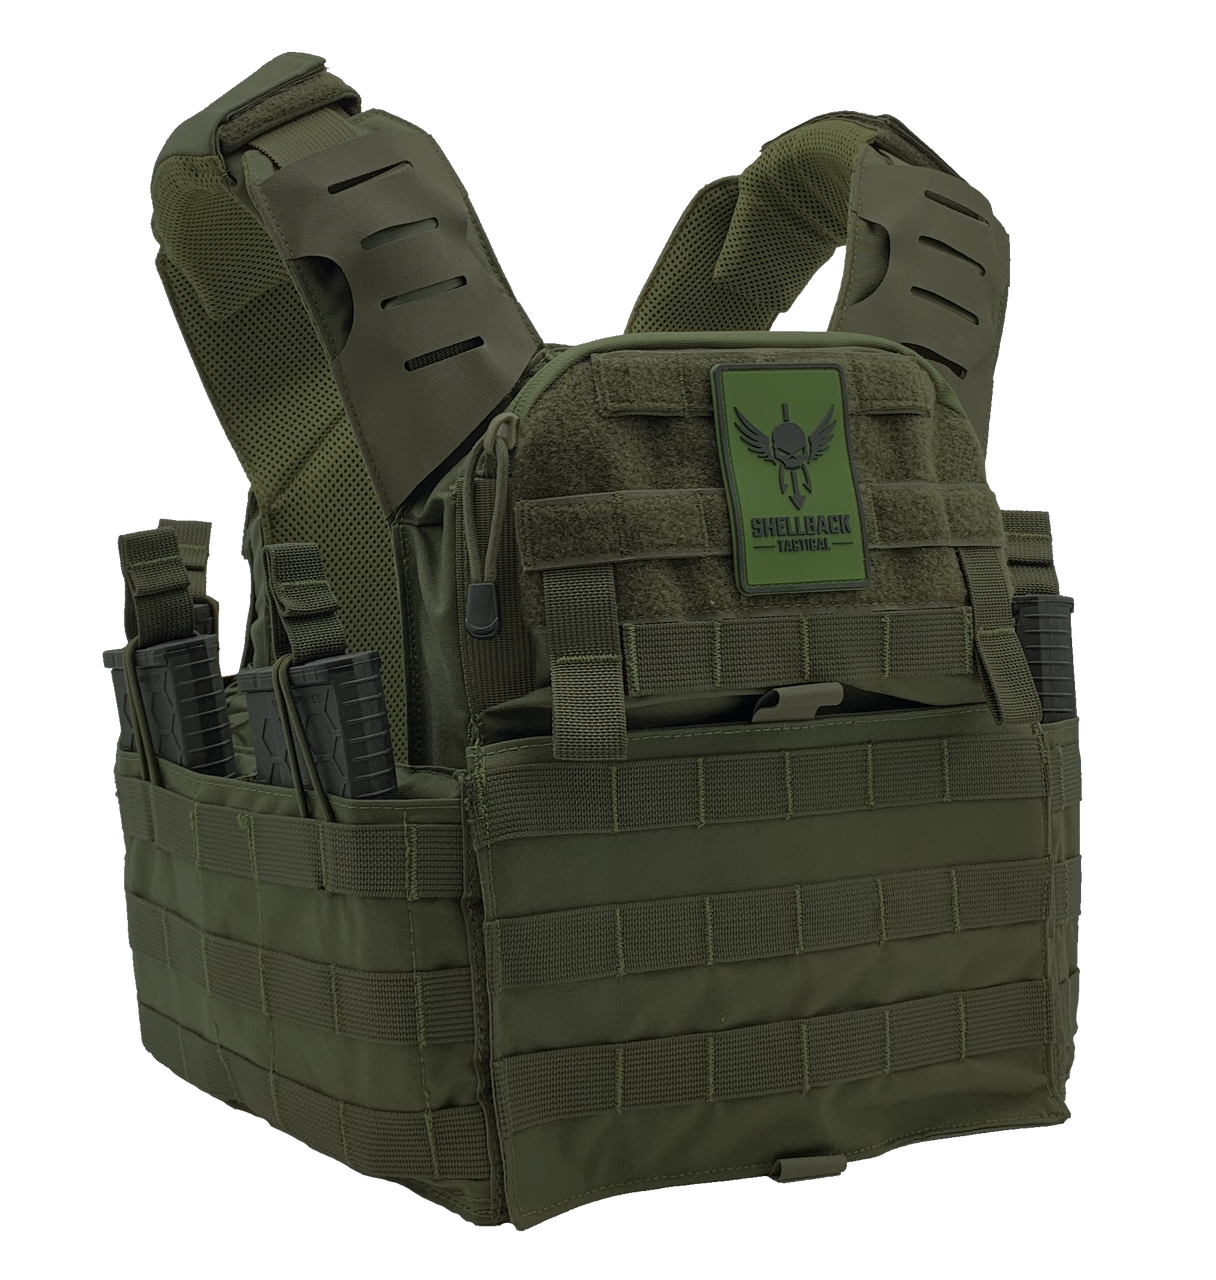 A Shellback Tactical Banshee Elite 2.0 Plate Carrier in olive green.